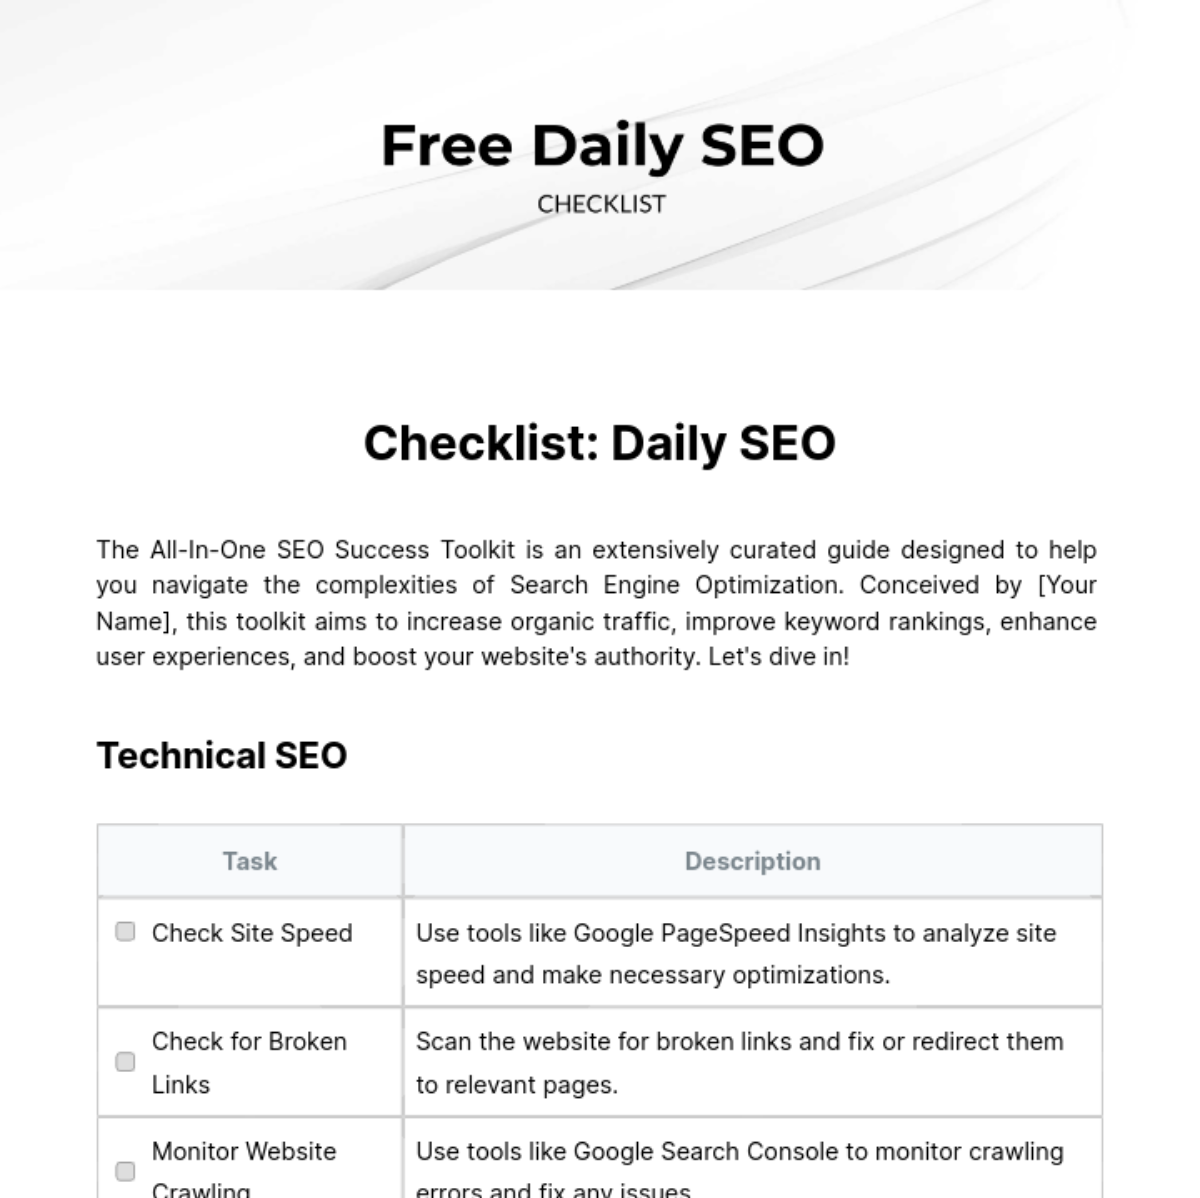 Free Daily SEO Checklist Template